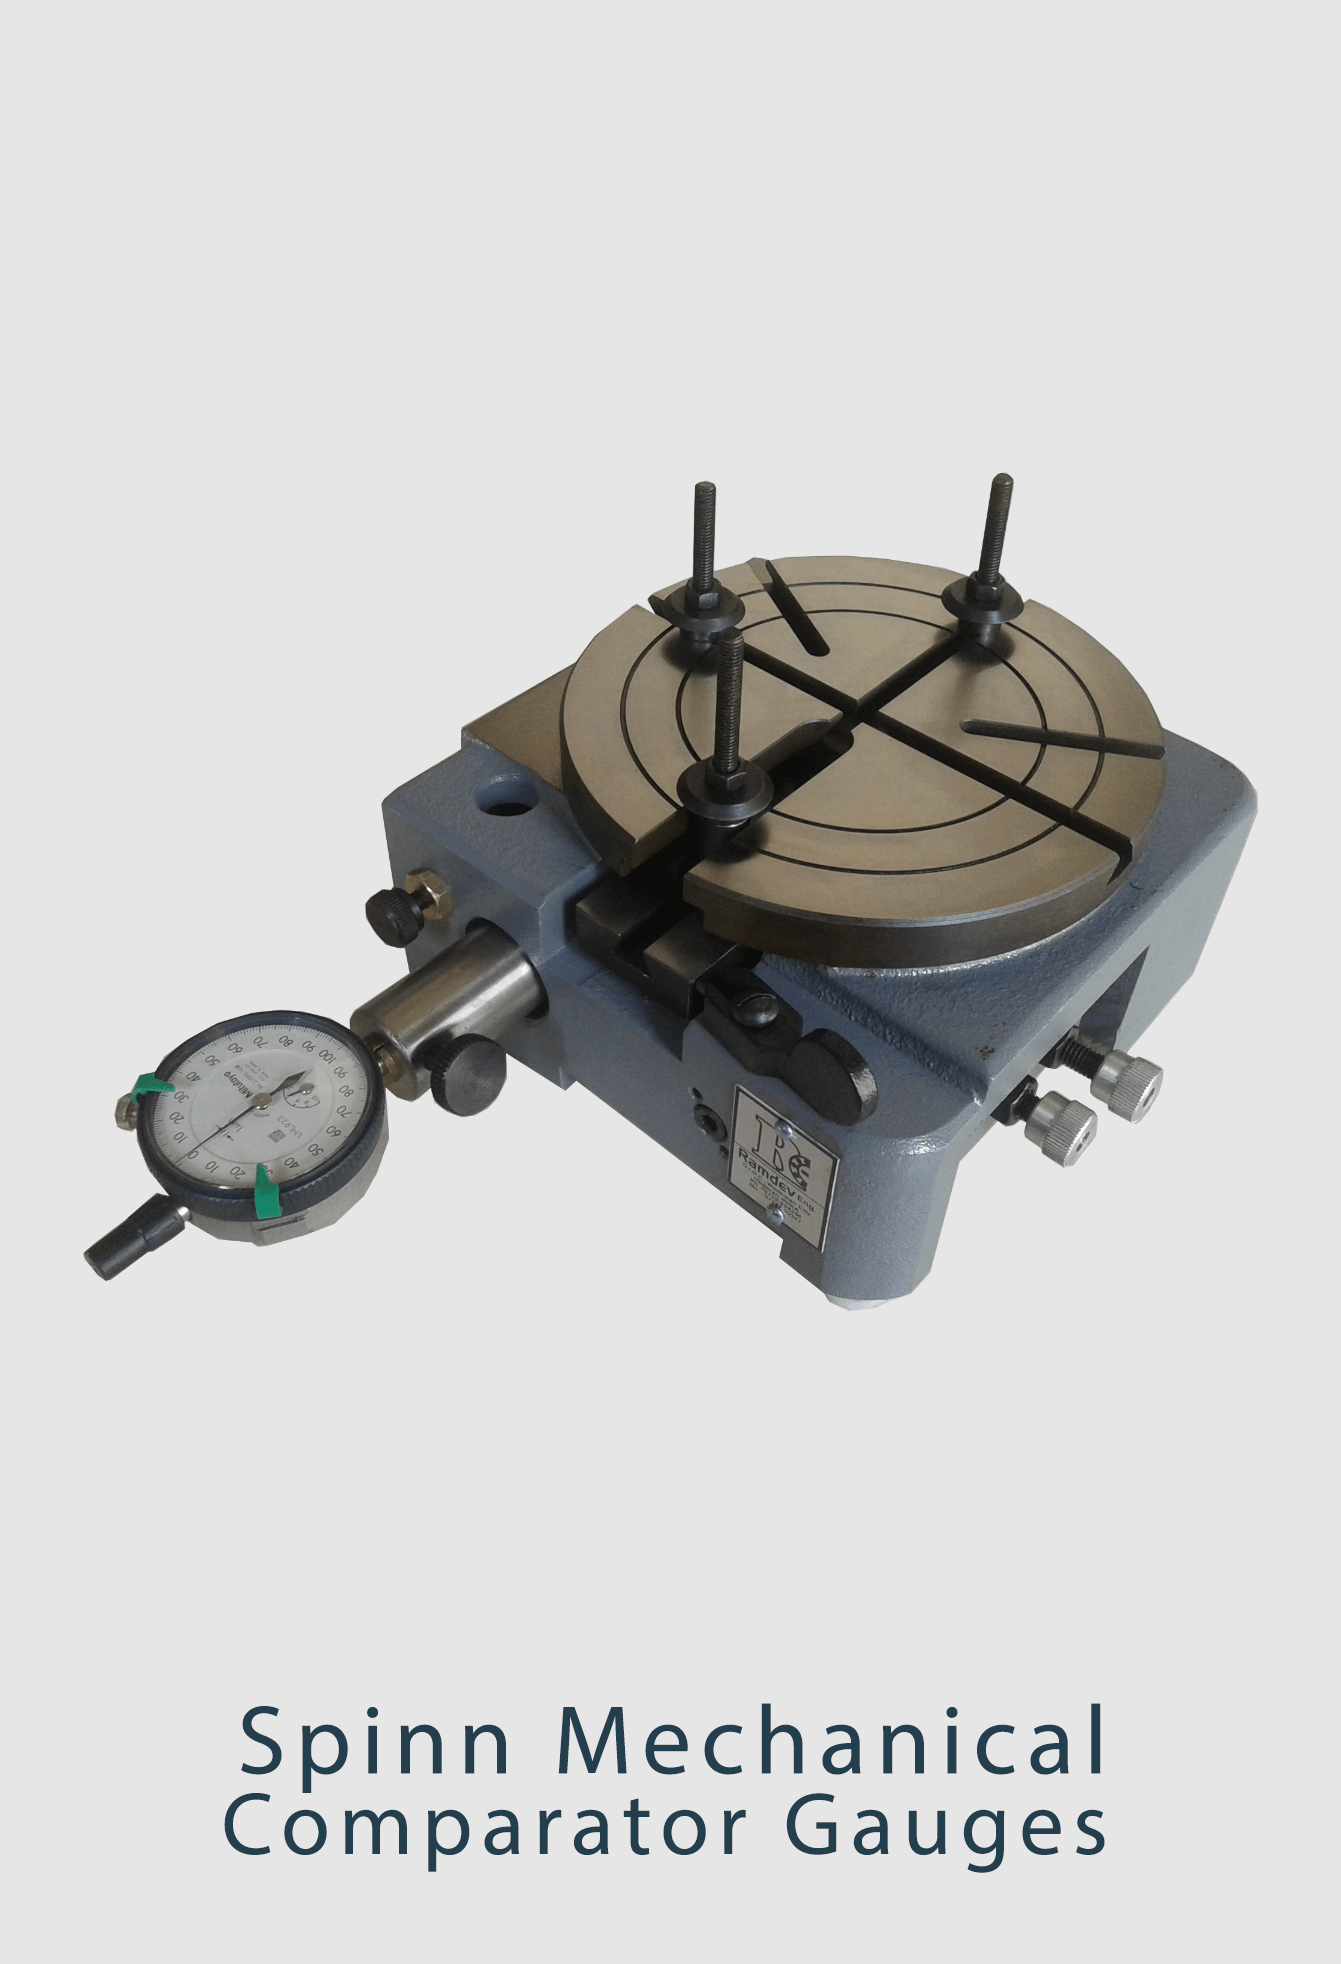 Spinn Mechanical Comparator Gauges